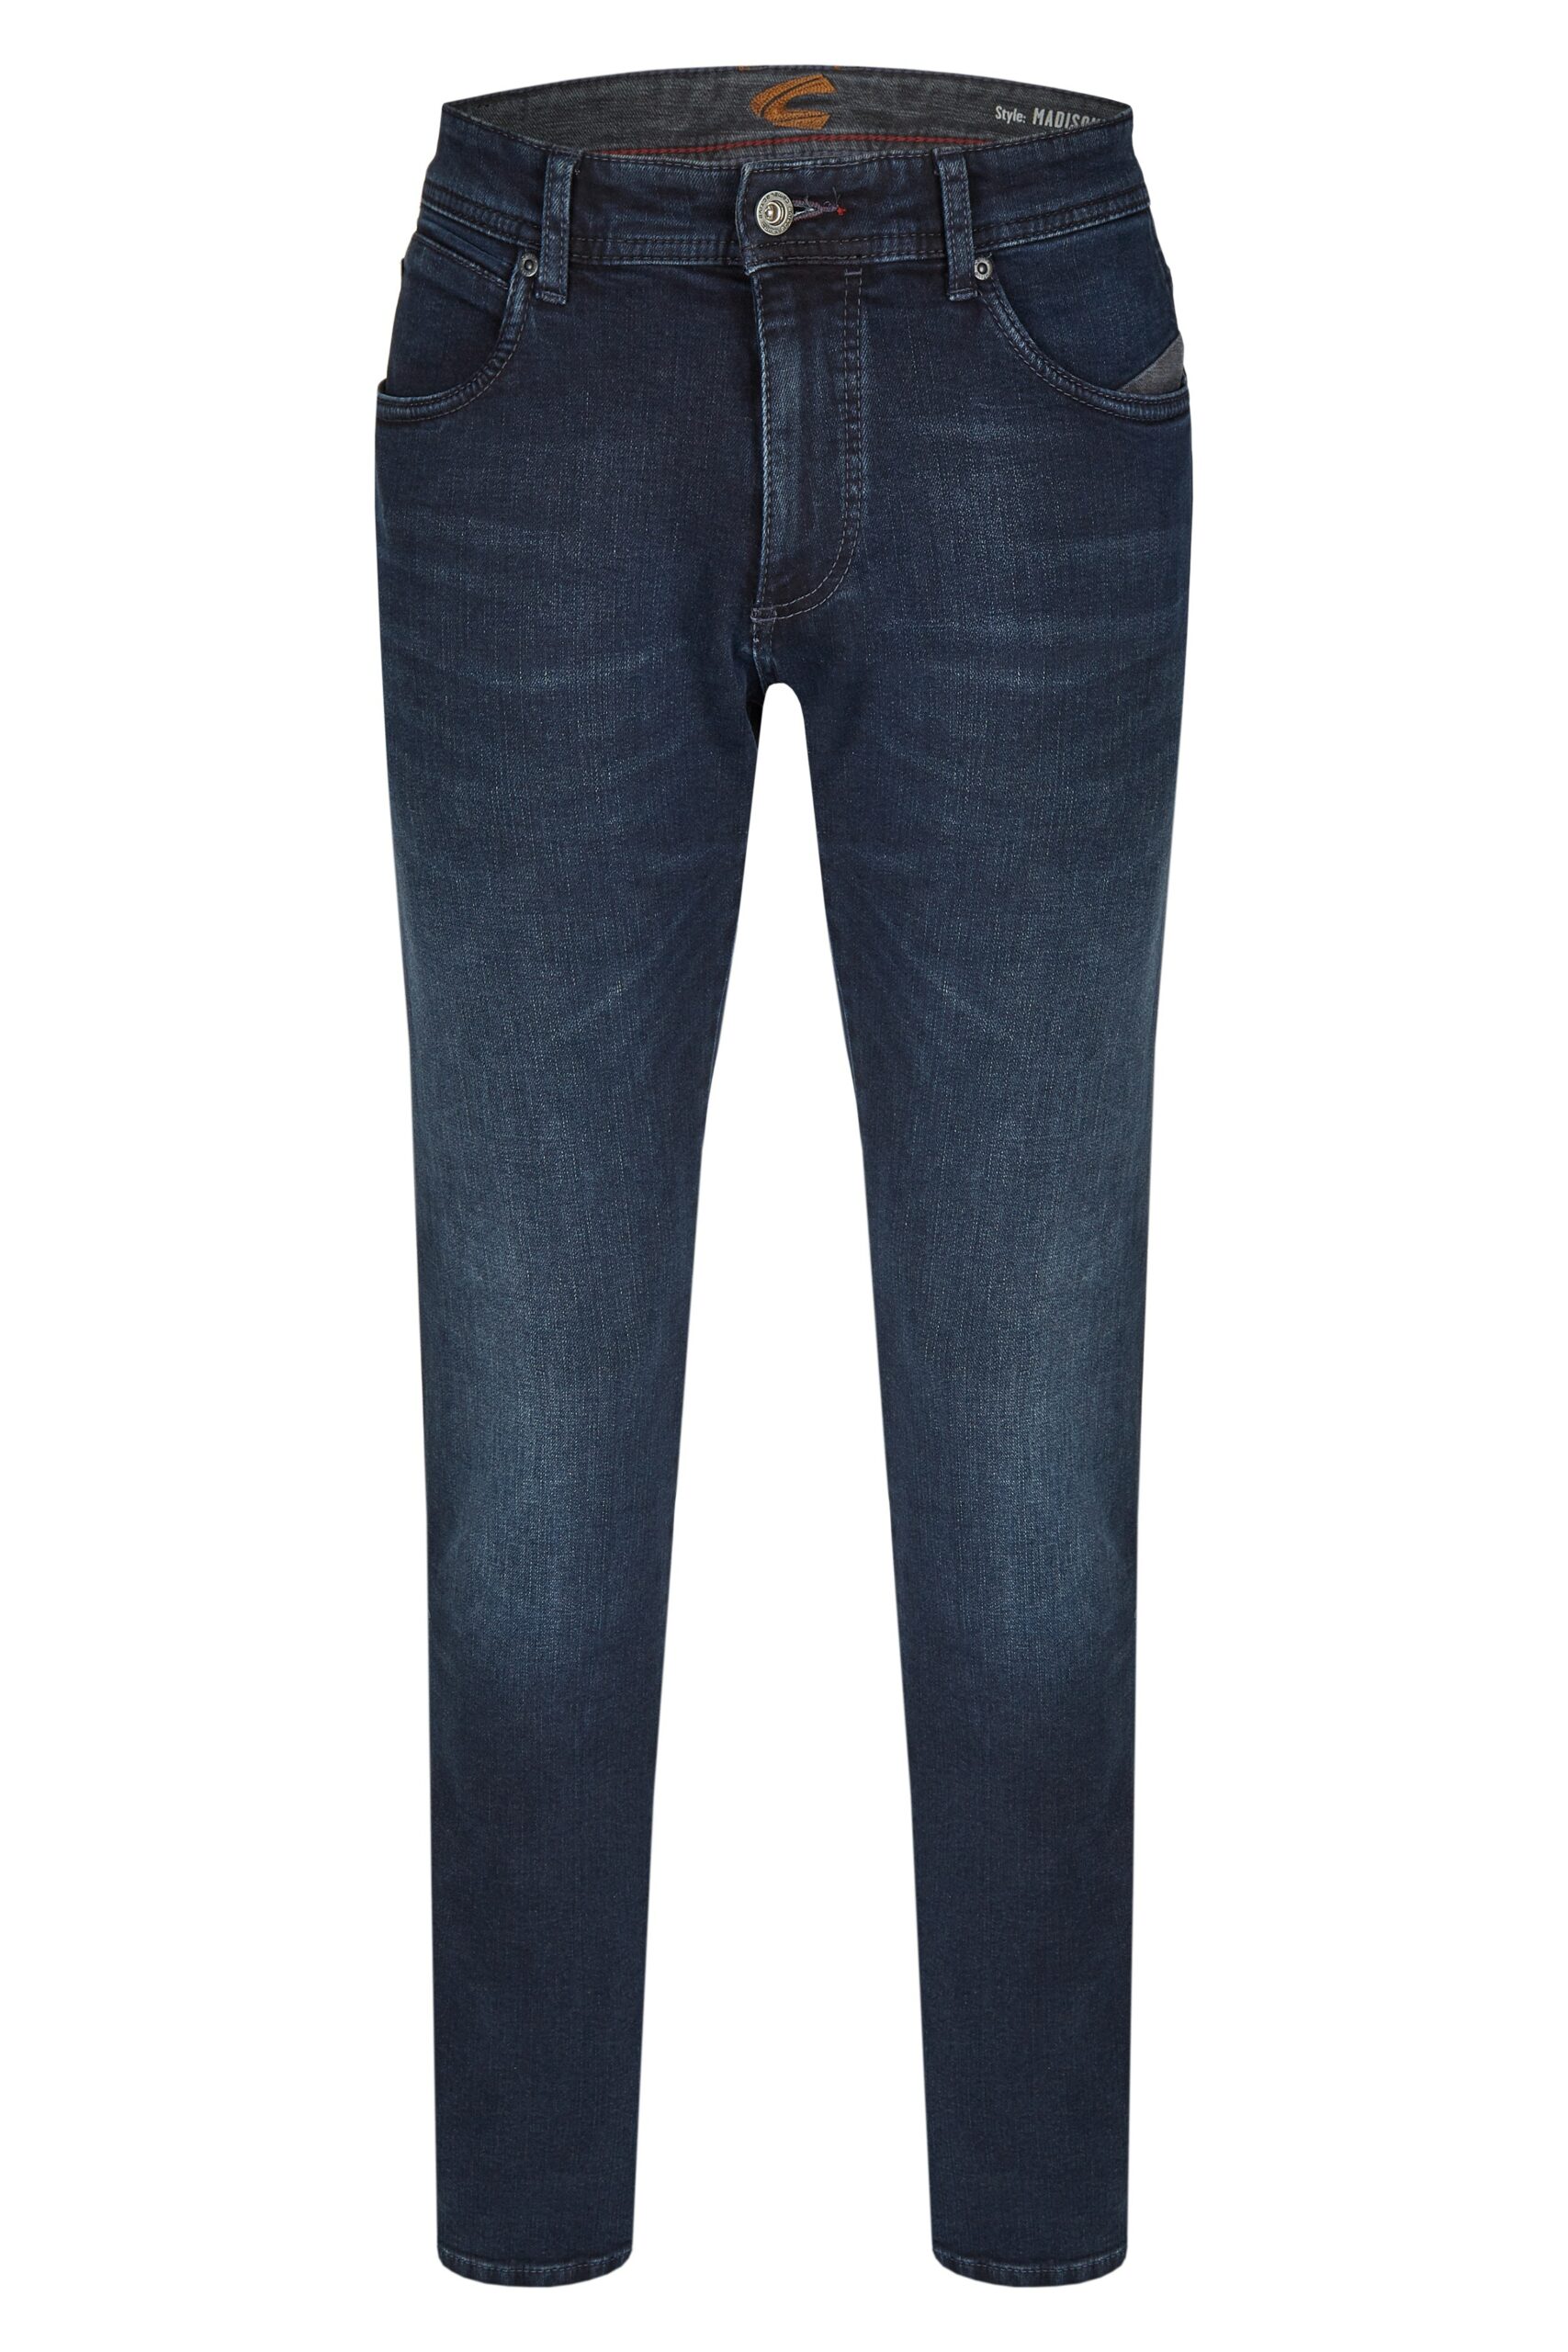 Shop active Hartmann MADISON Slim 5-POCKET Fit Mode Jeans mit CAMEL Stretch -